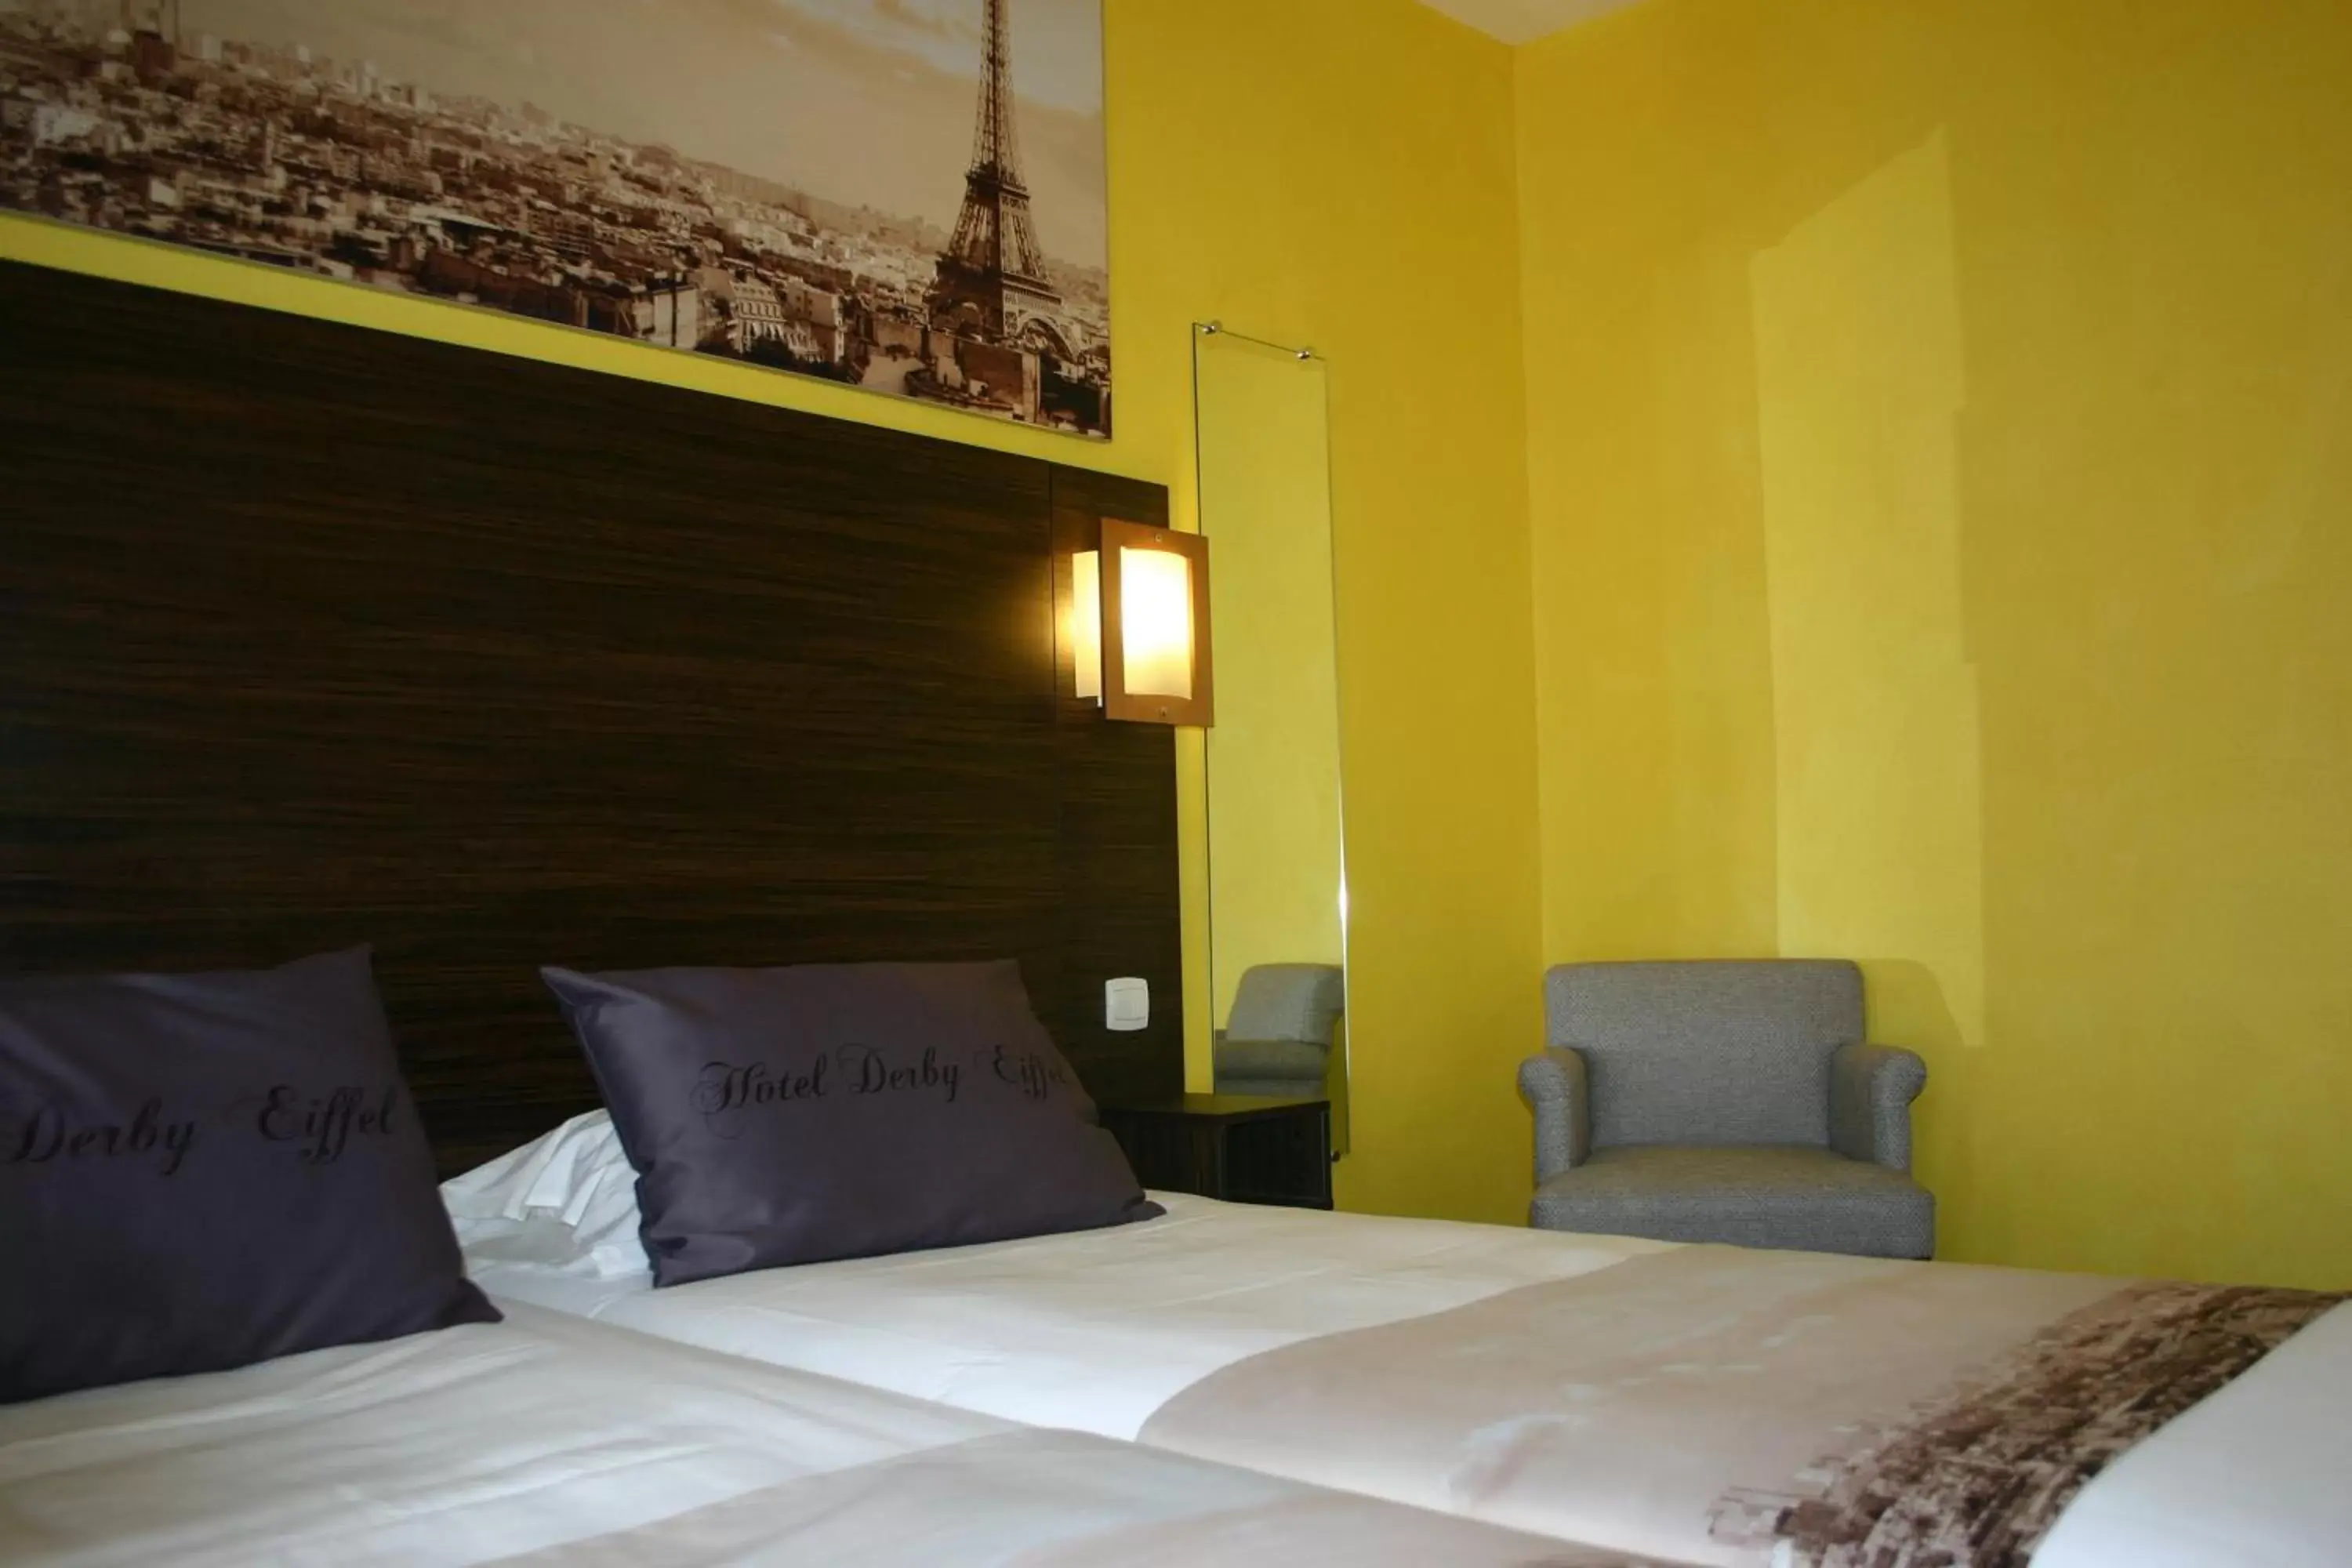 Bed, Room Photo in Hôtel Derby Eiffel